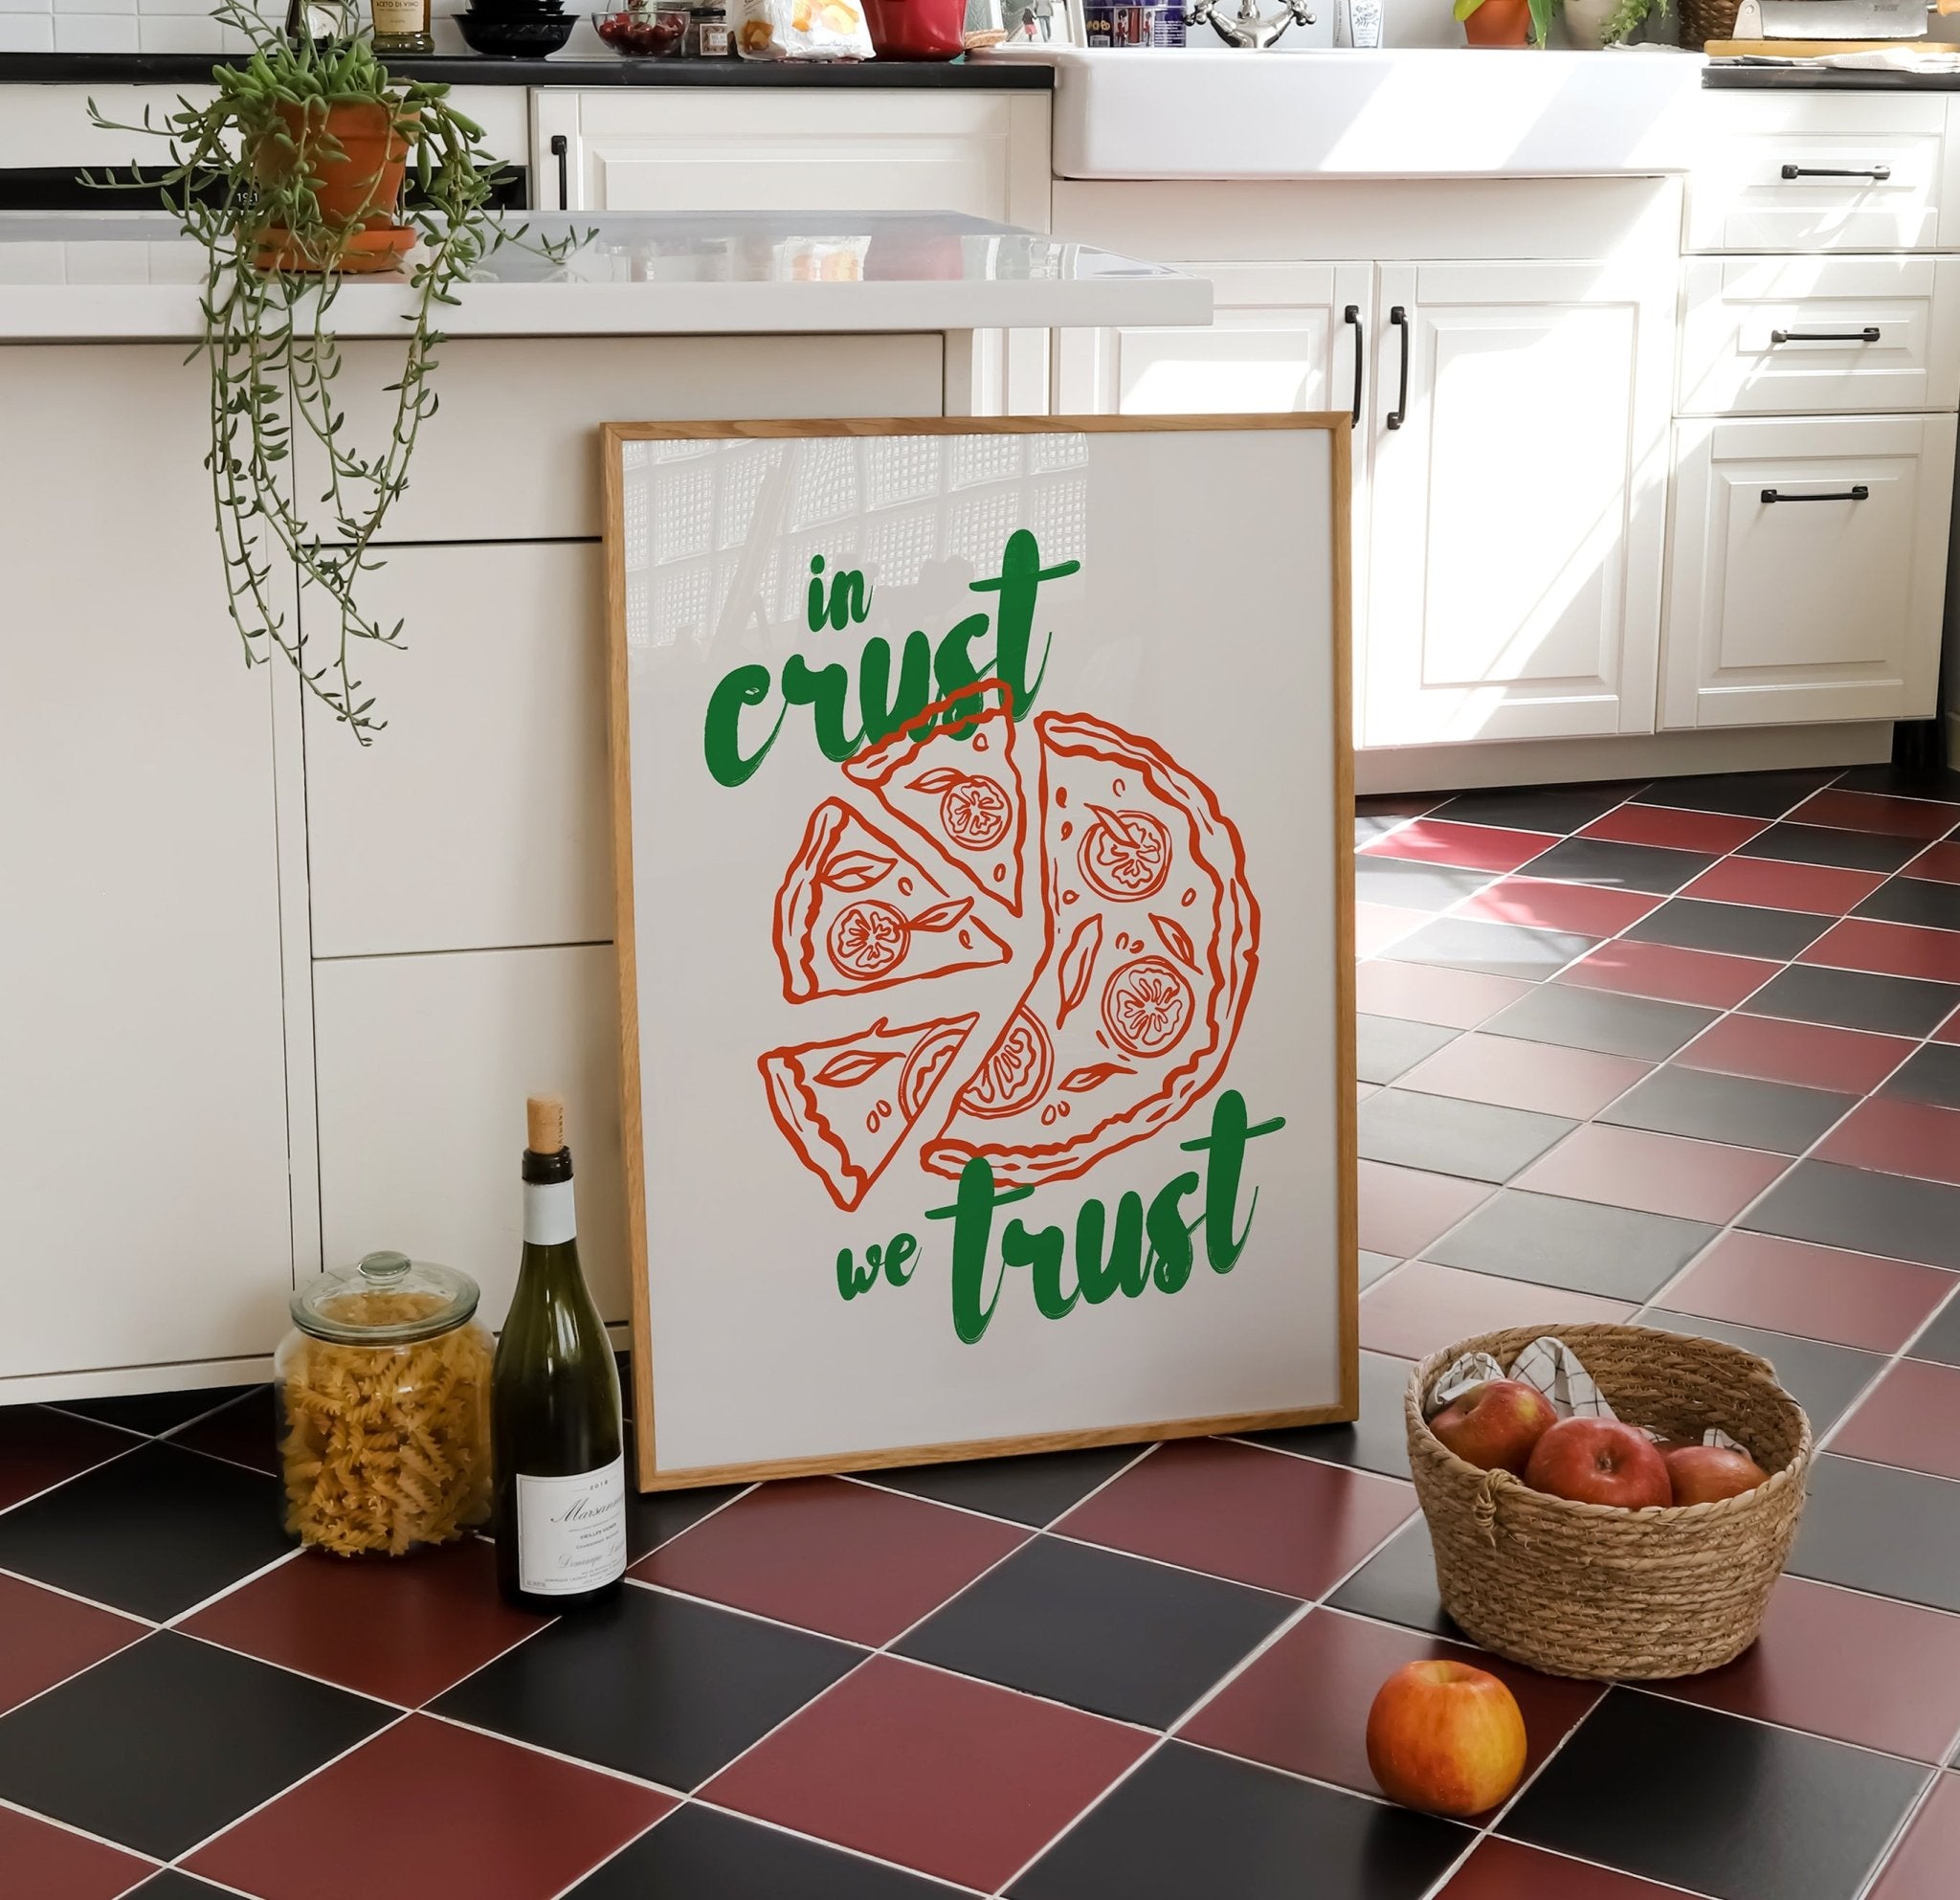 In Crust We Trust Print